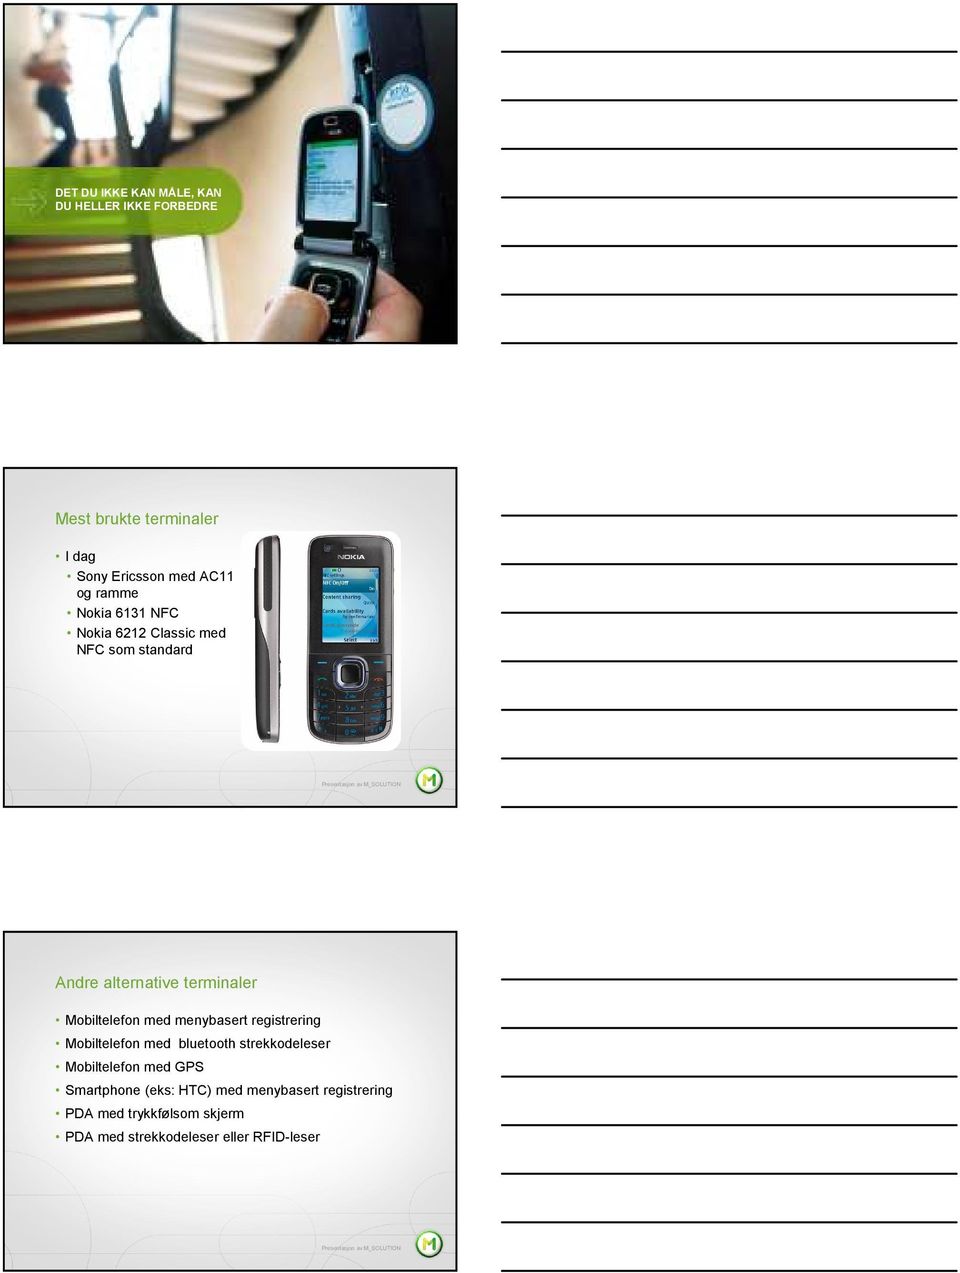 Mobiltelefon med menybasert registrering Mobiltelefon med bluetooth strekkodeleser Mobiltelefon med GPS